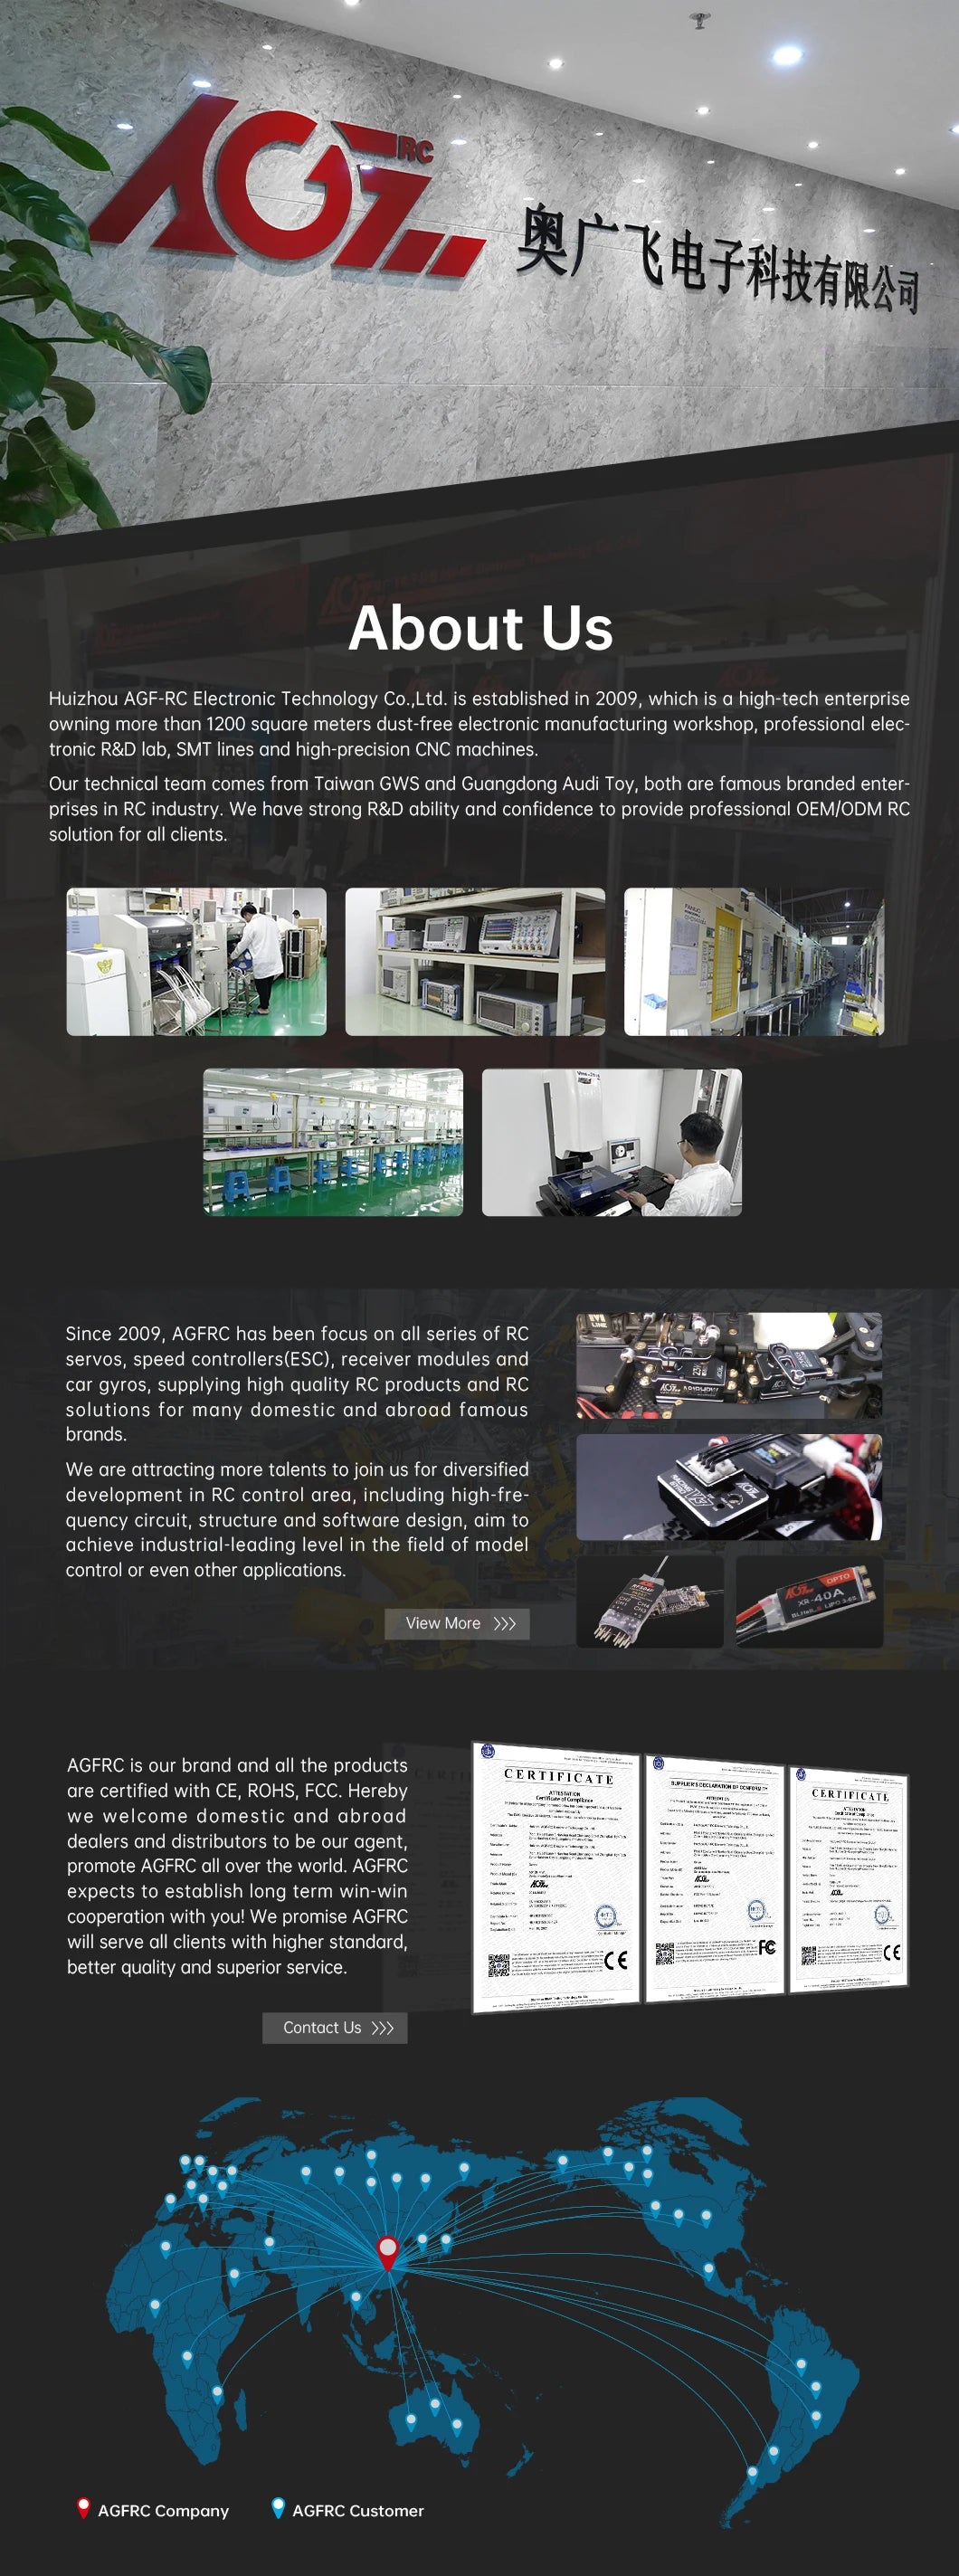 AGFRC A80BHMF, Huizhou AGF-RC Electronic Technology Co-,Ltd. is a